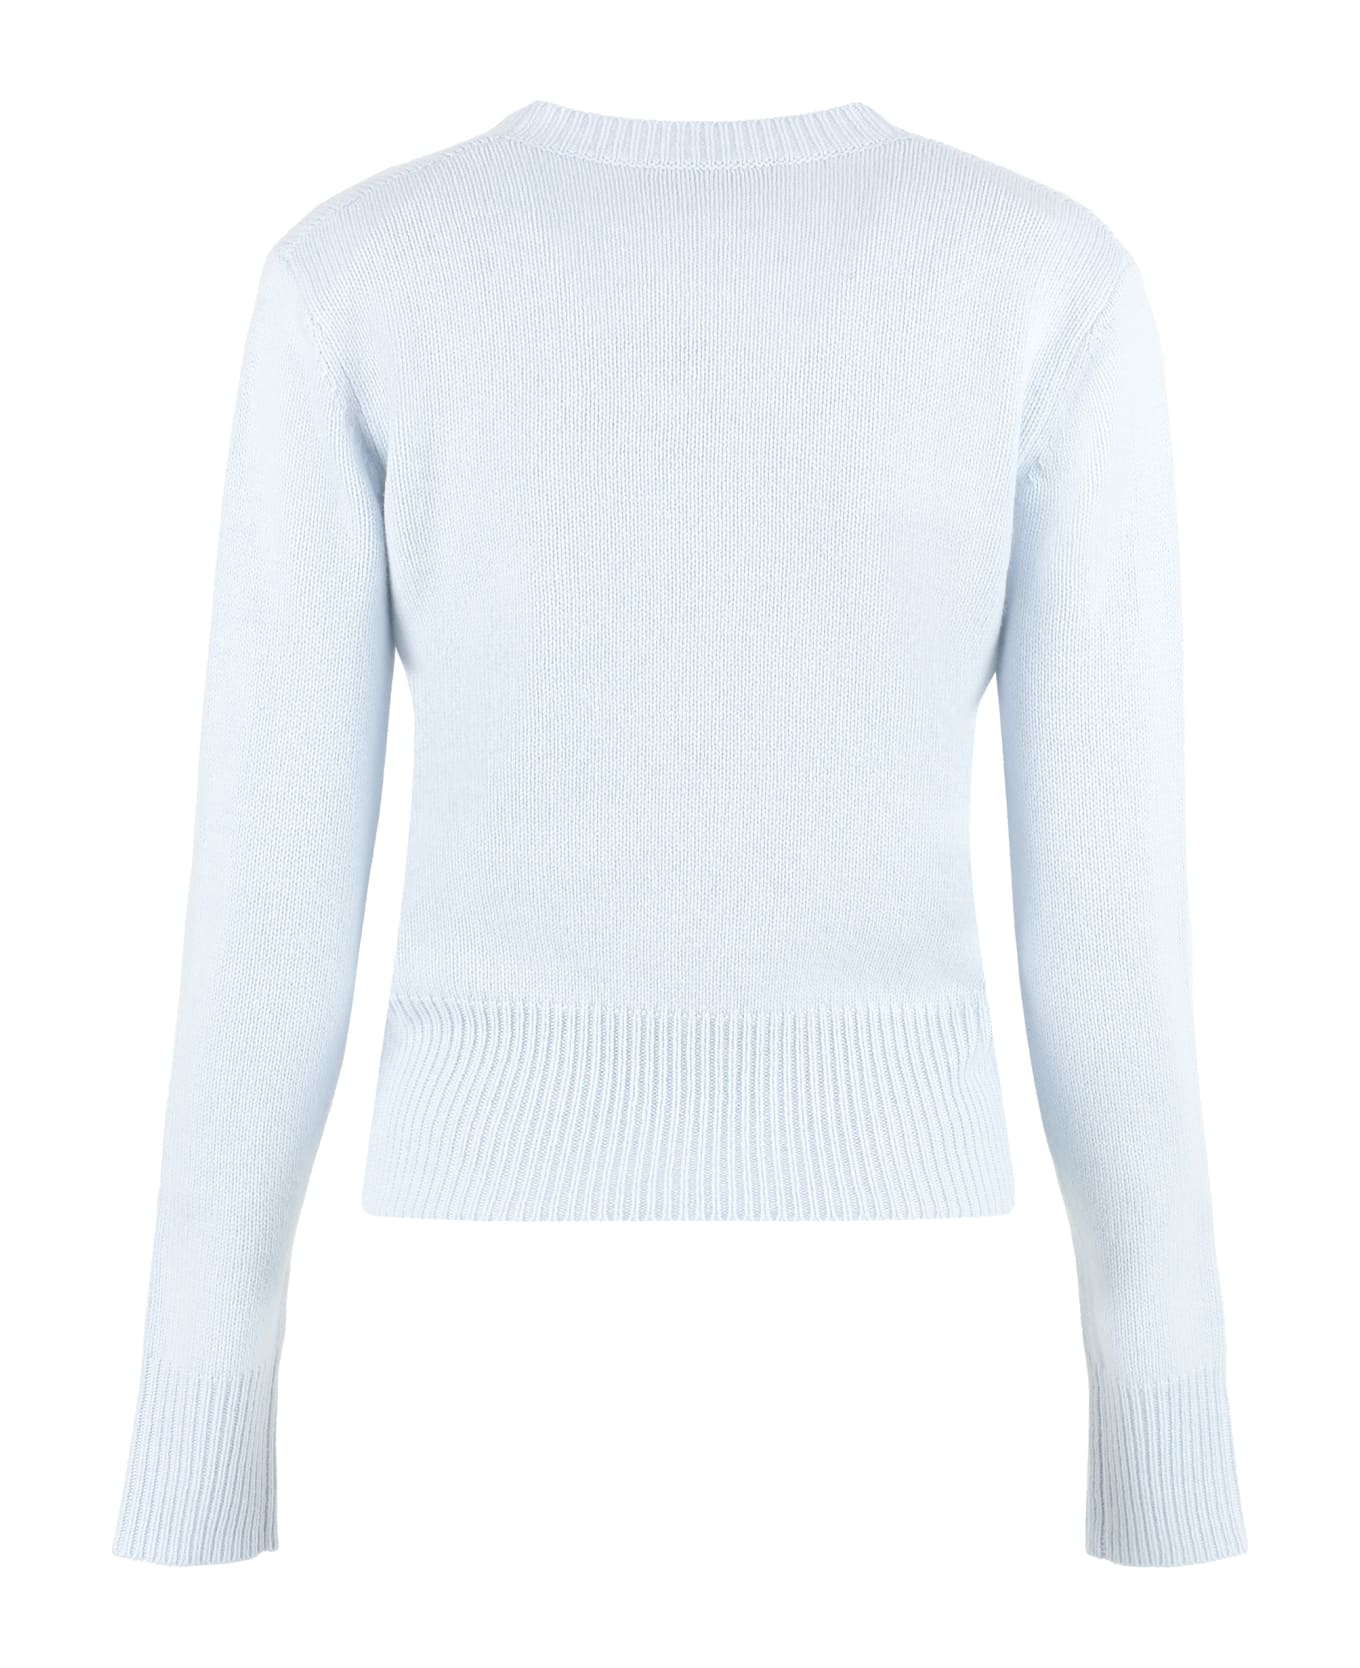 Max Mara Studio Cashmere V-neck Sweater - Light Blue